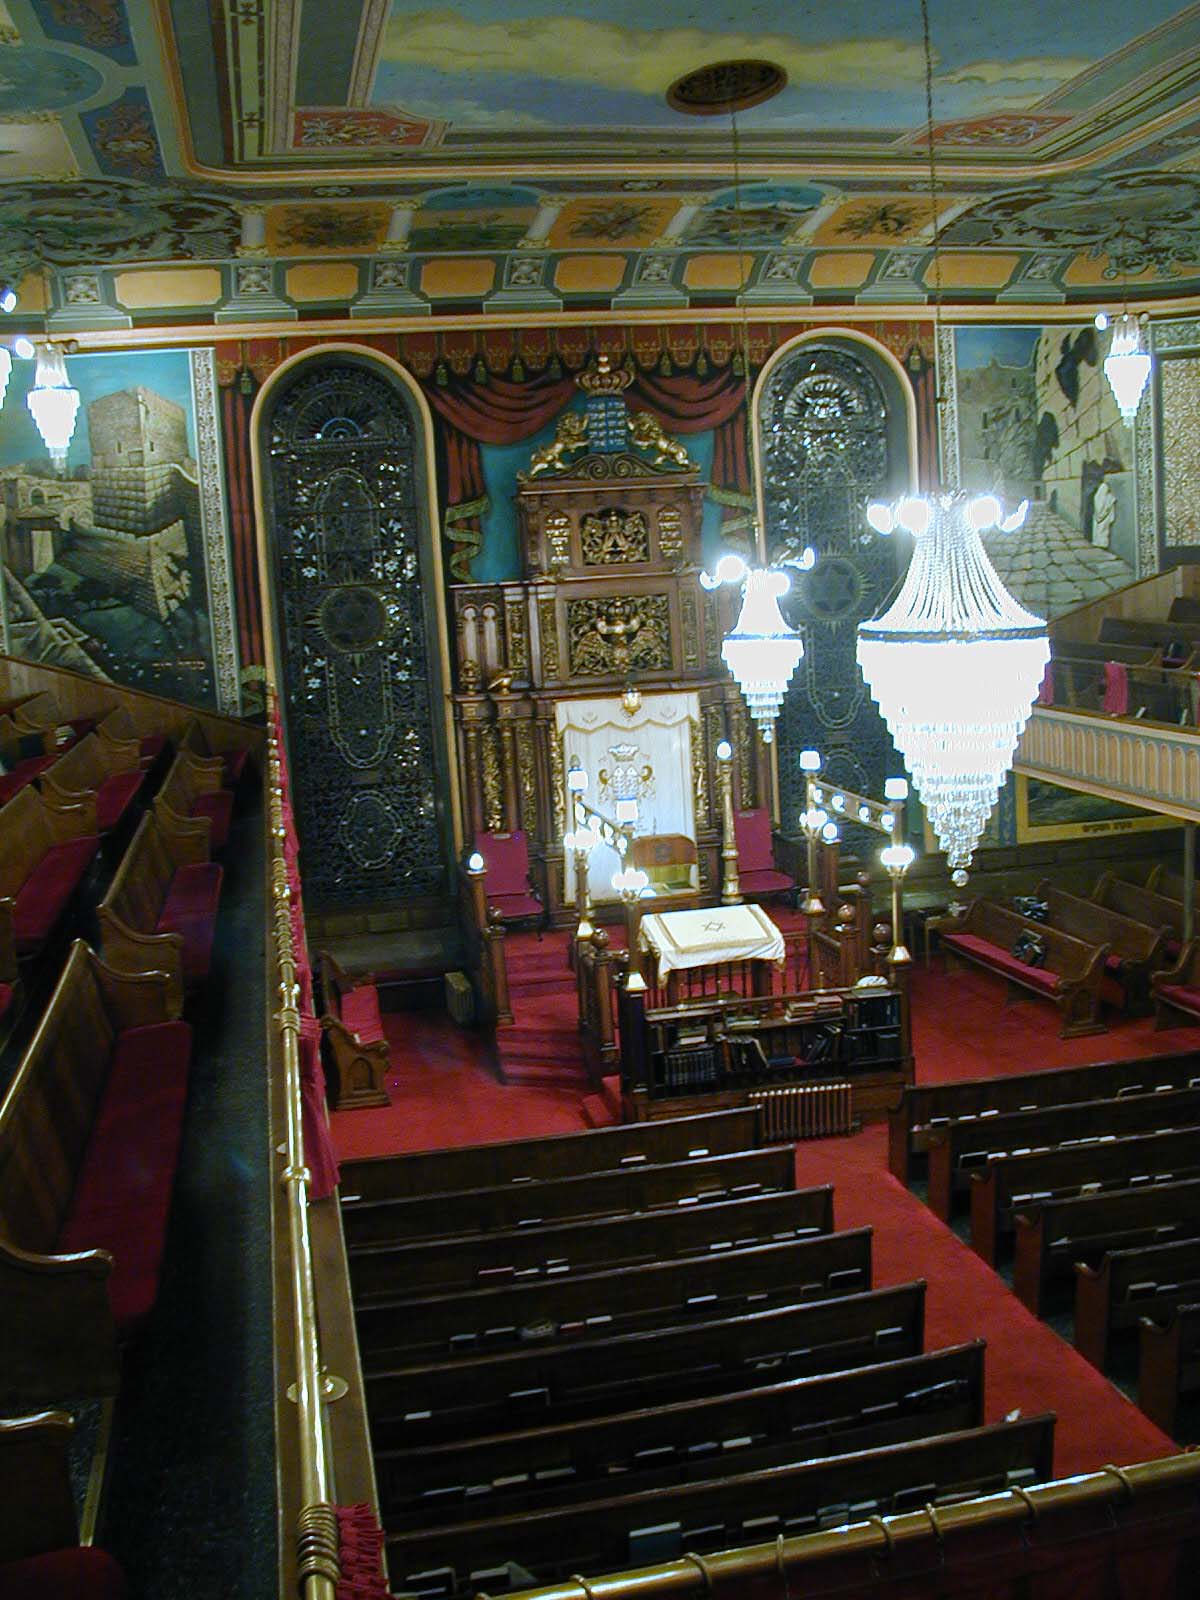 Bialystoker Synagogue